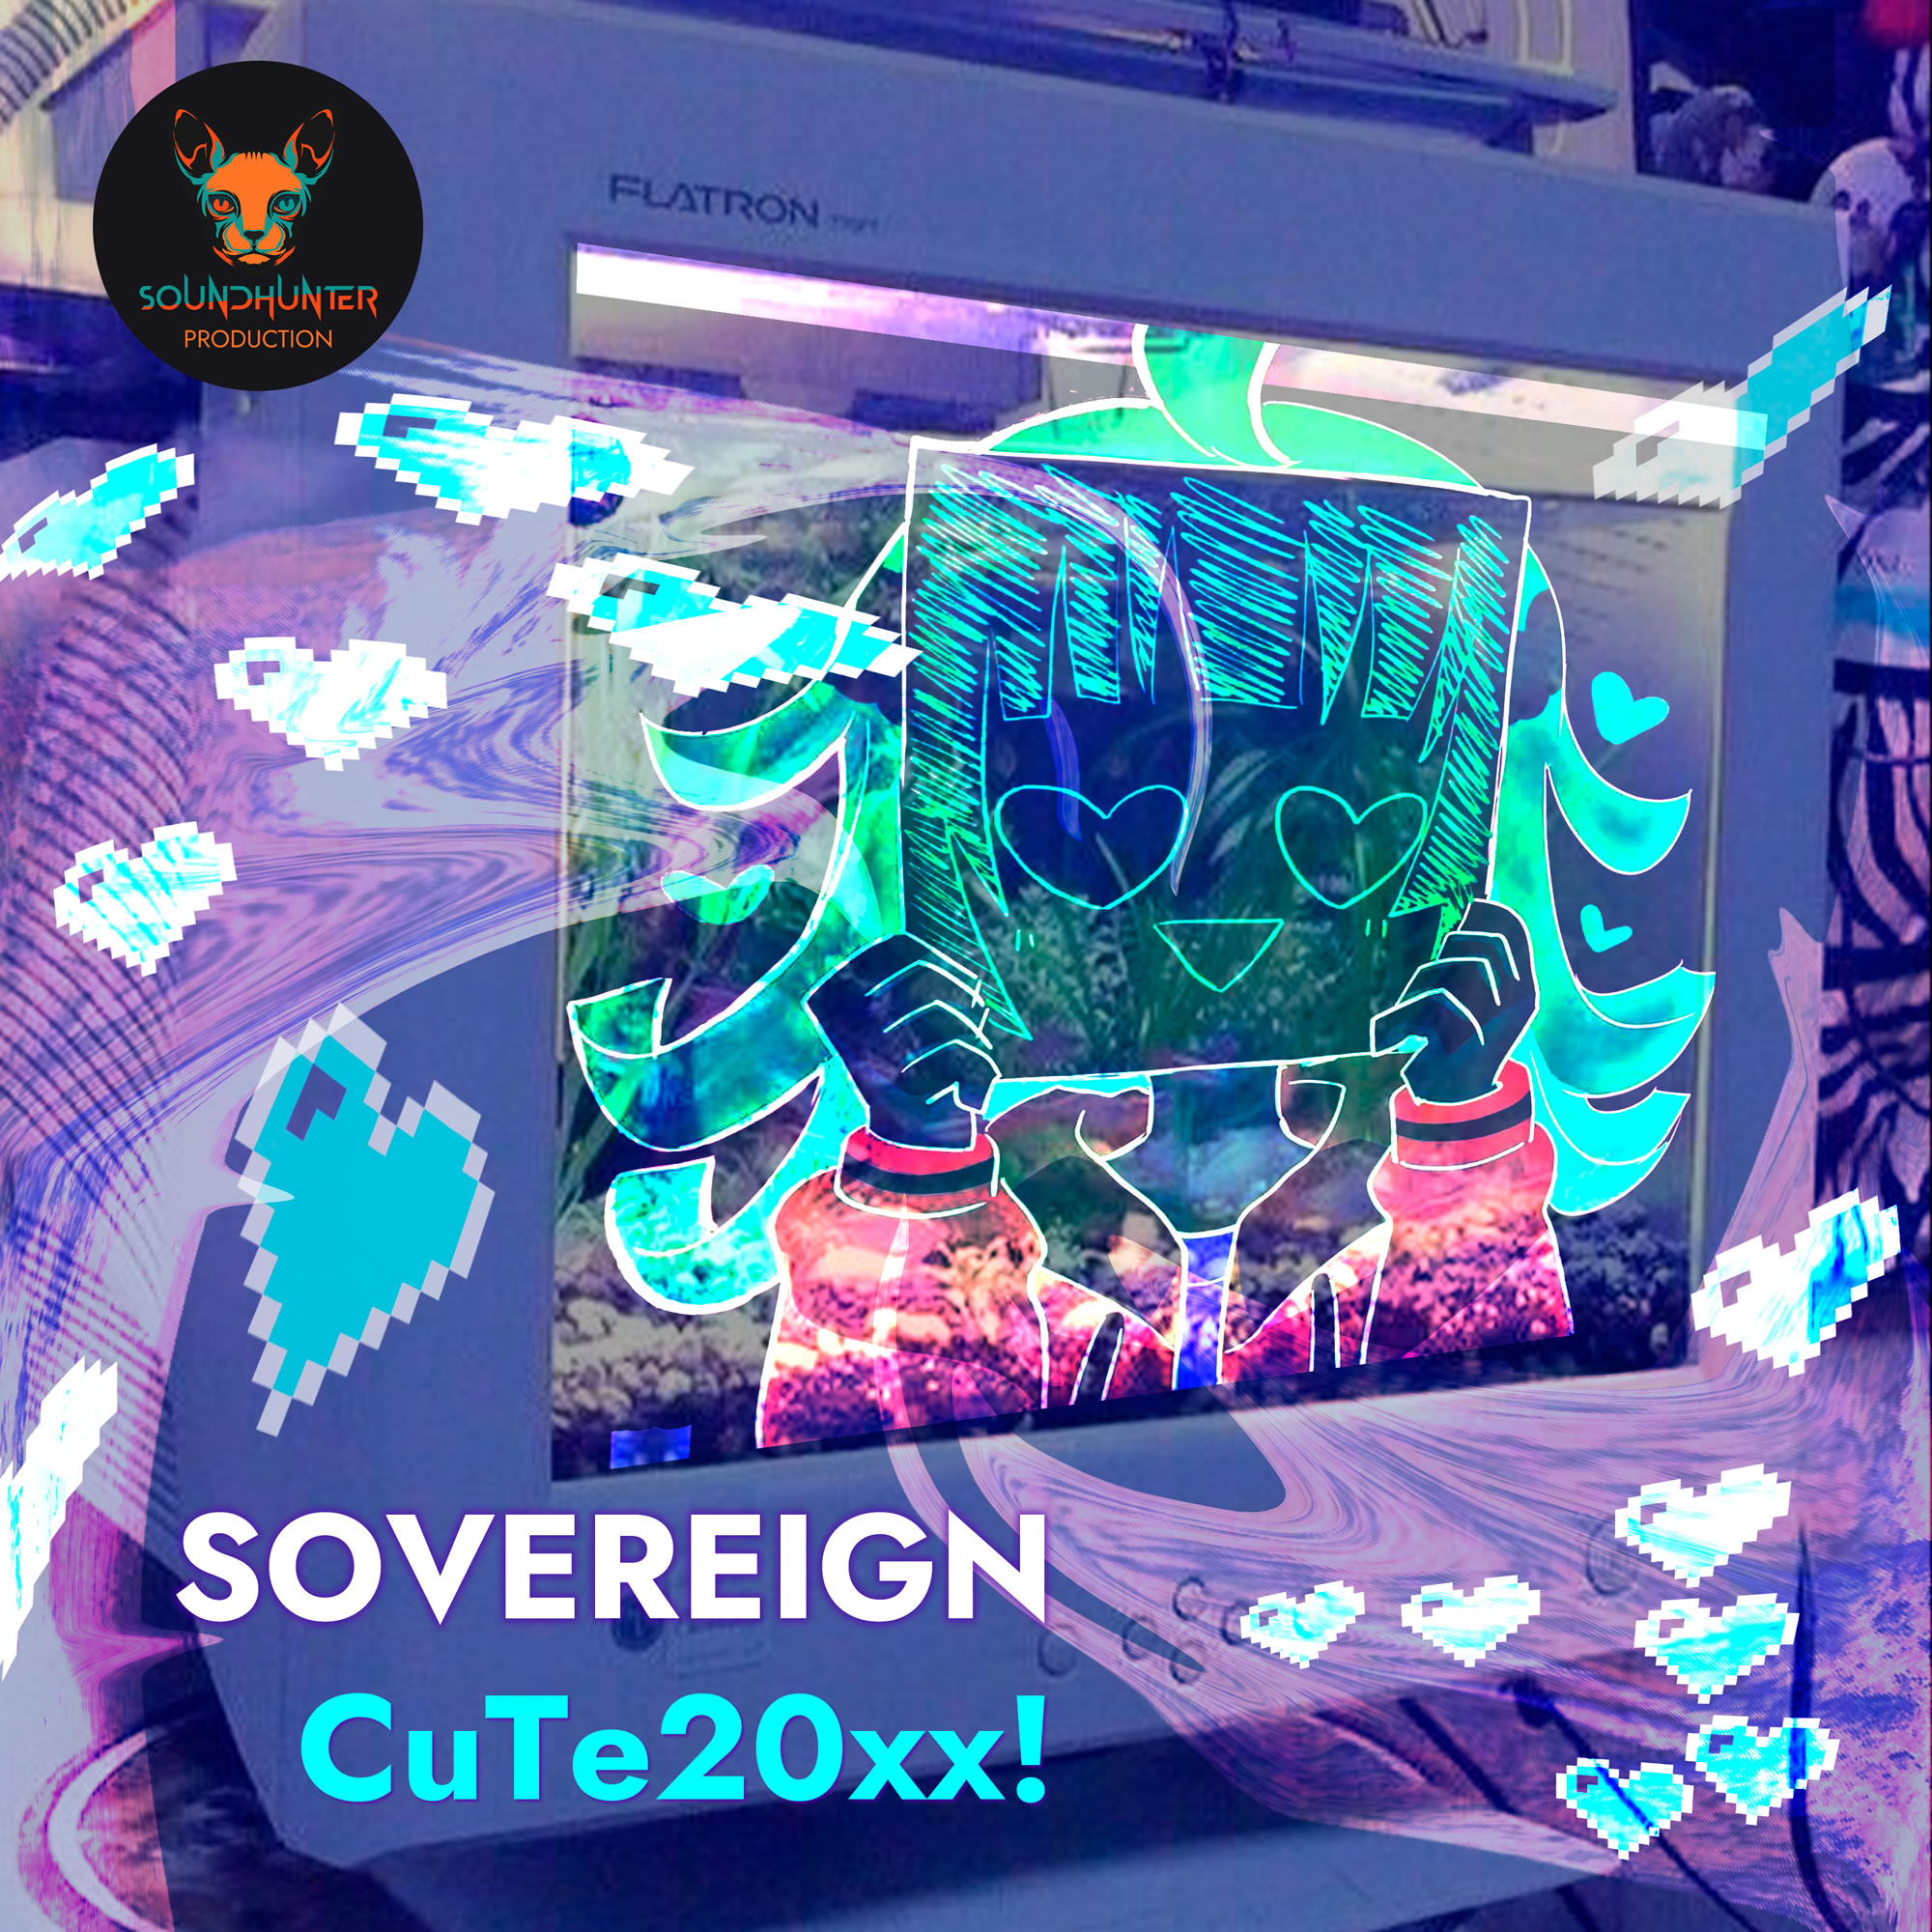 Sovereign - CuTe20xx!